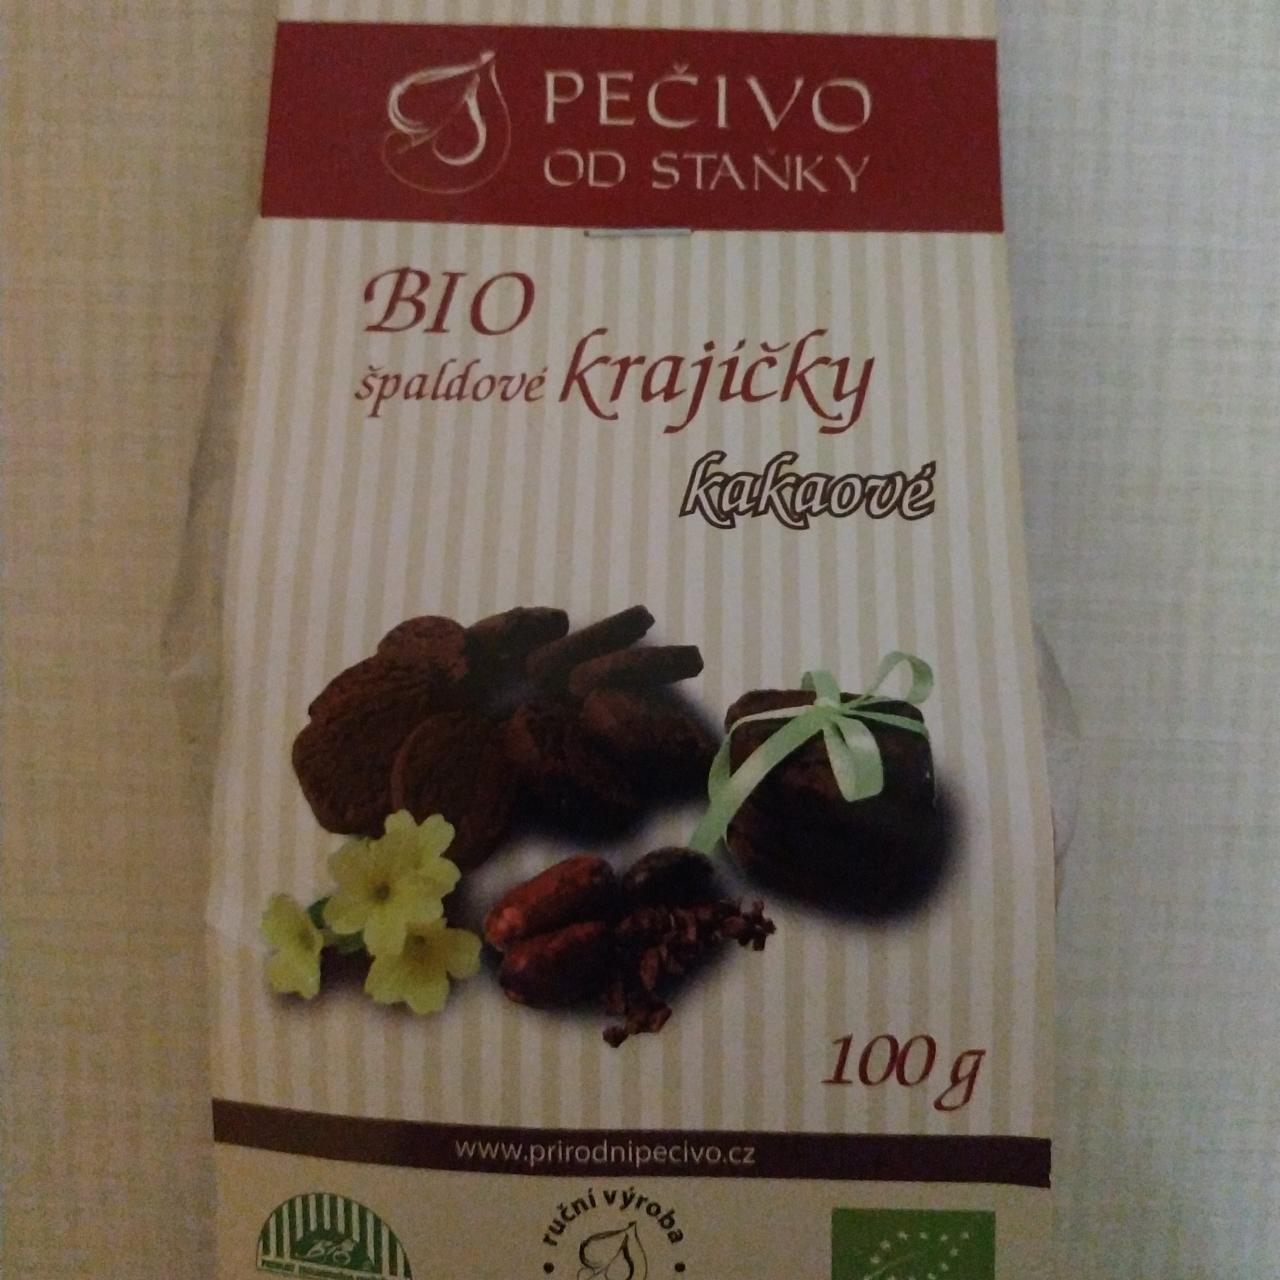 Fotografie - Bio špaldové krajíčky kakaové Pečivo od Staňky